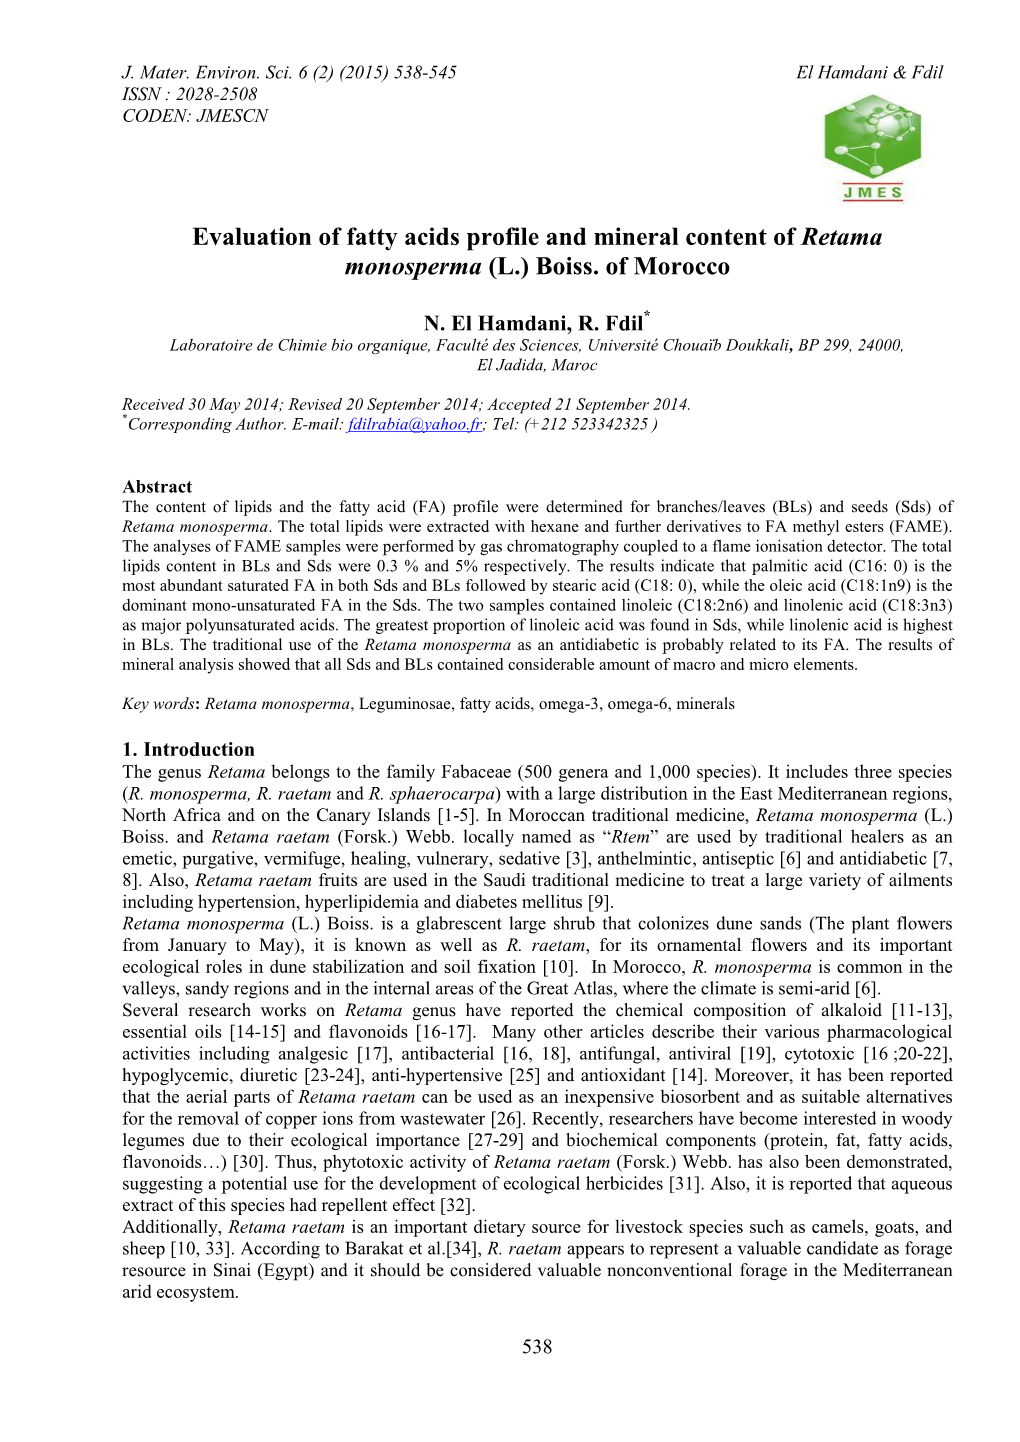 Evaluation of Fatty Acids Profile and Mineral Content of Retama Monosperma (L.) Boiss